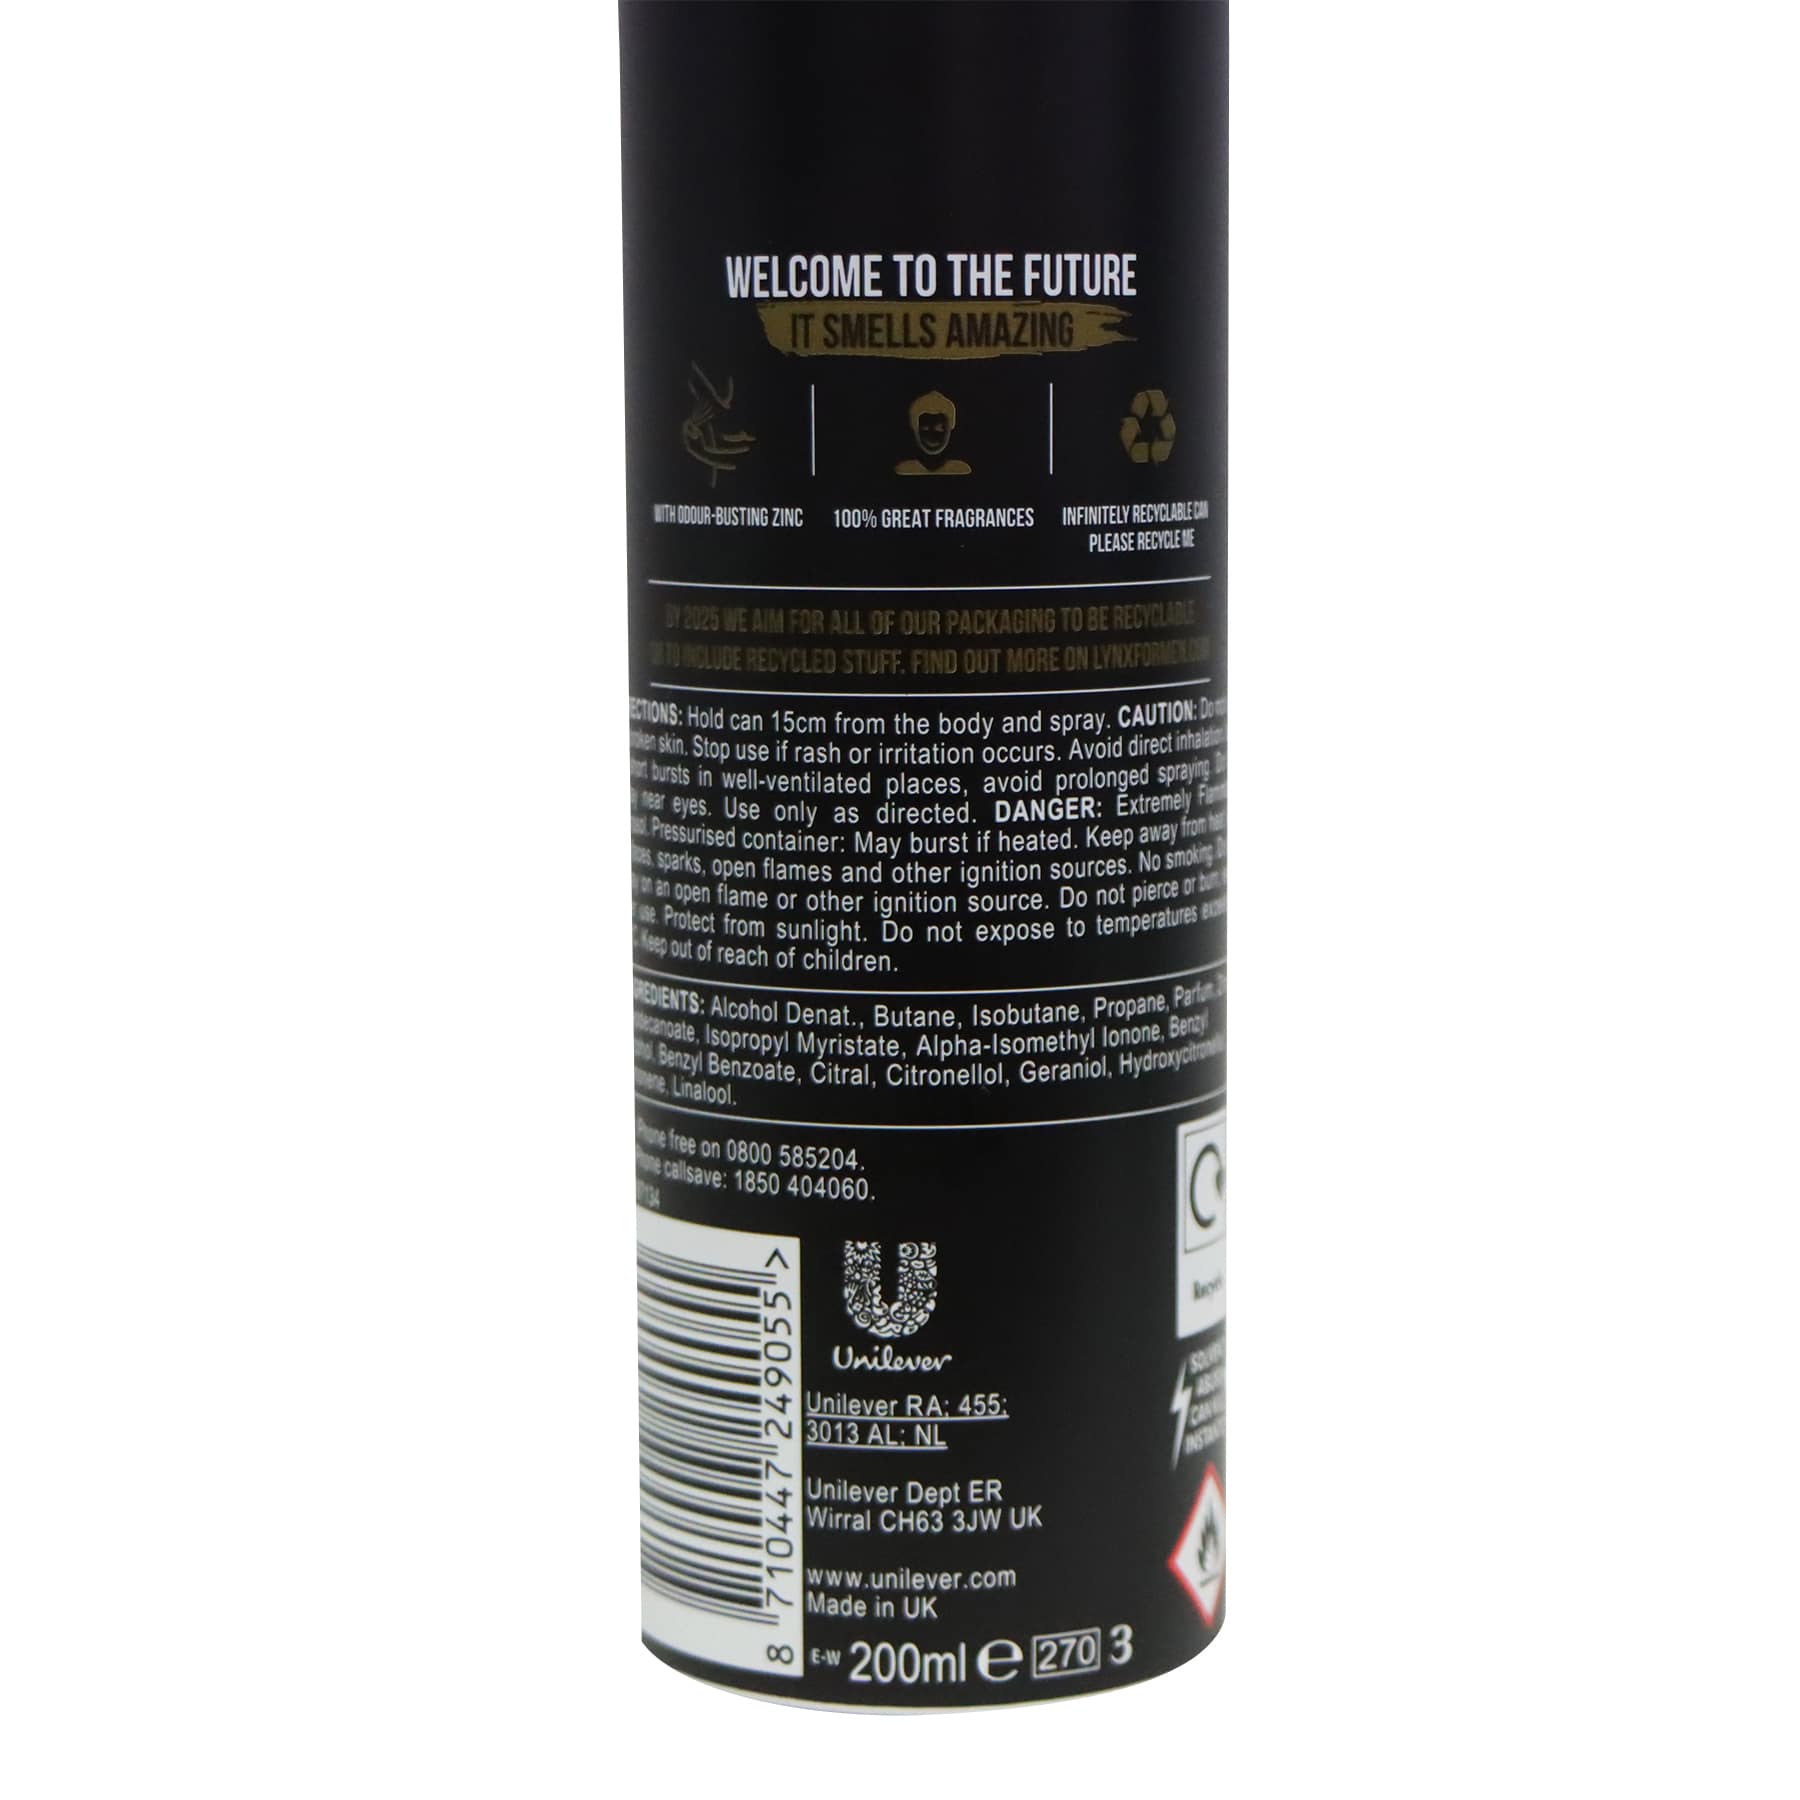 Lynx Deodorant Body Spray 200ml (Gold)